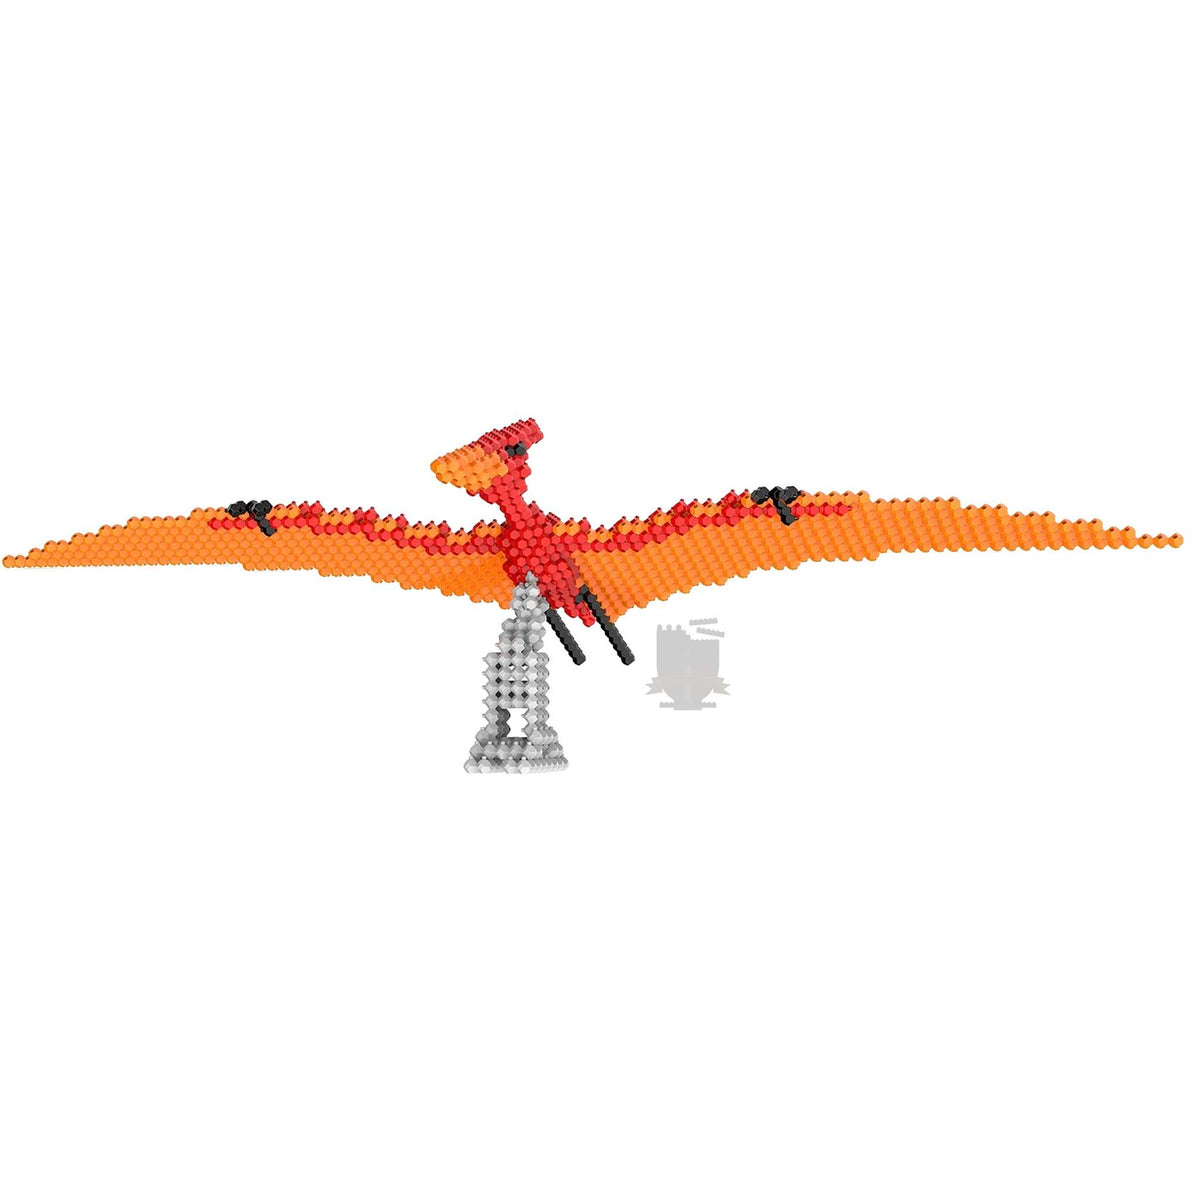 57005 - Pterosaurus (Kadele)